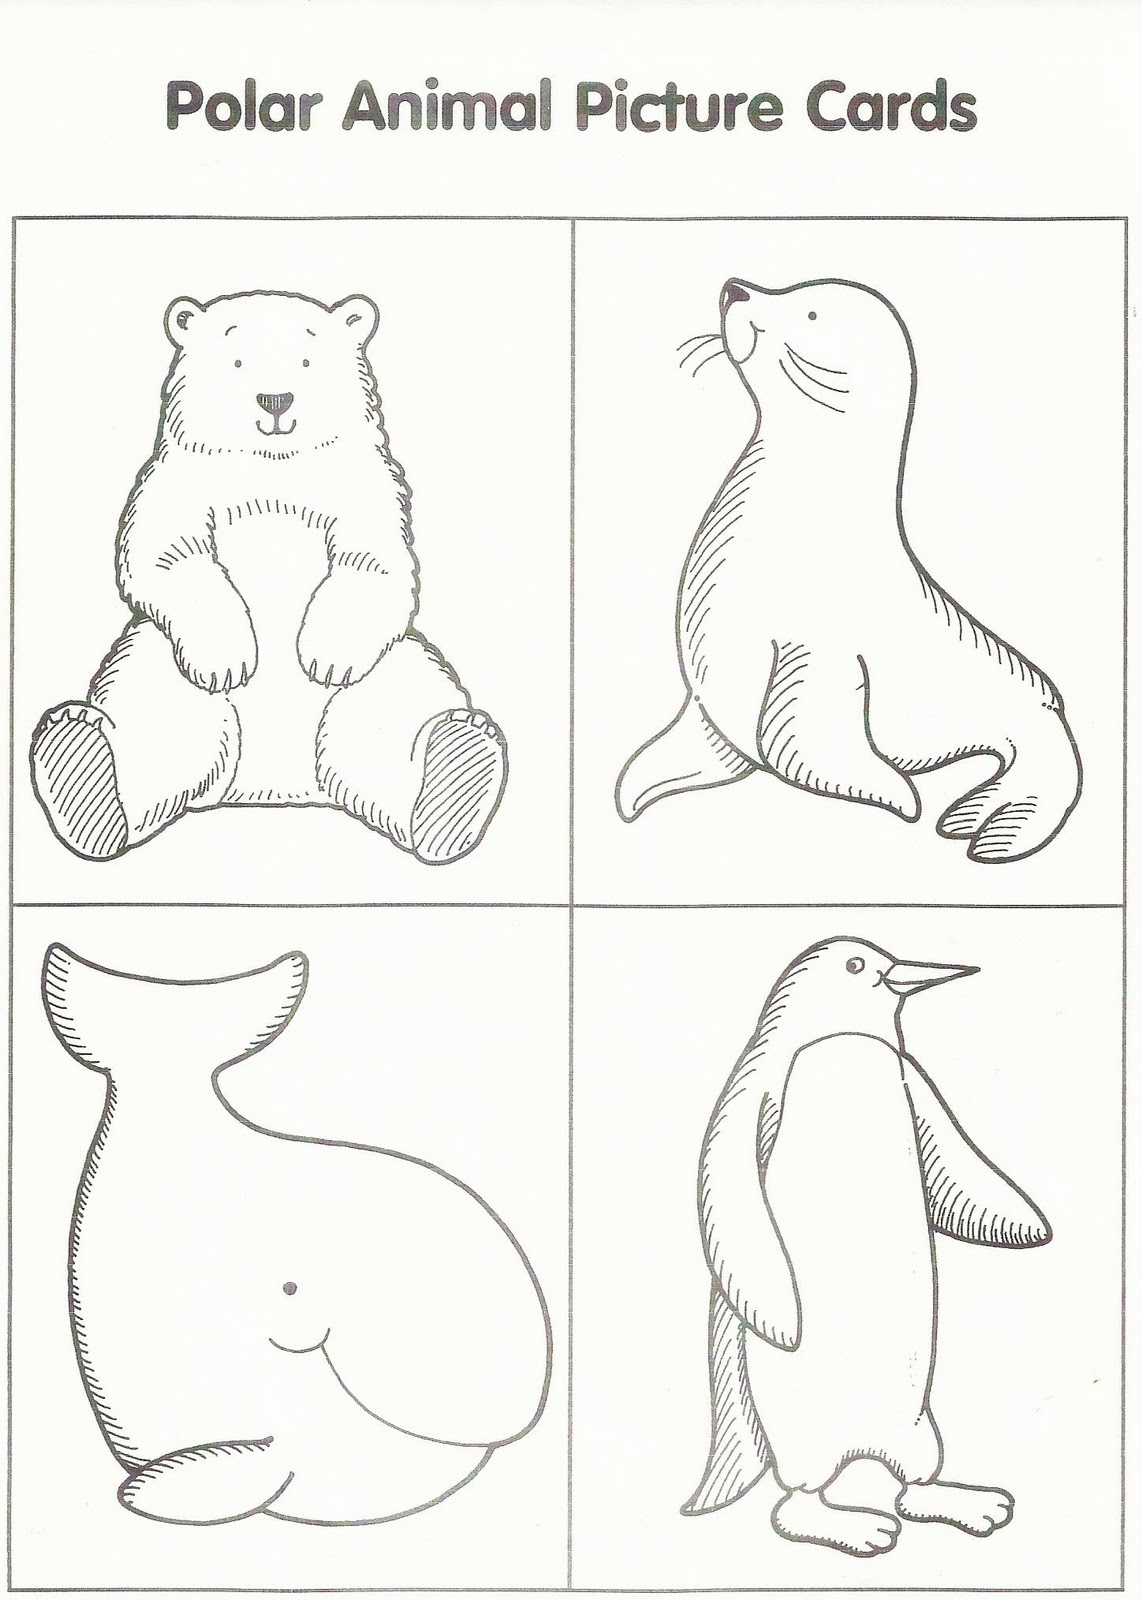 squish-preschool-ideas-january-artic-animals-polar-animals-winter